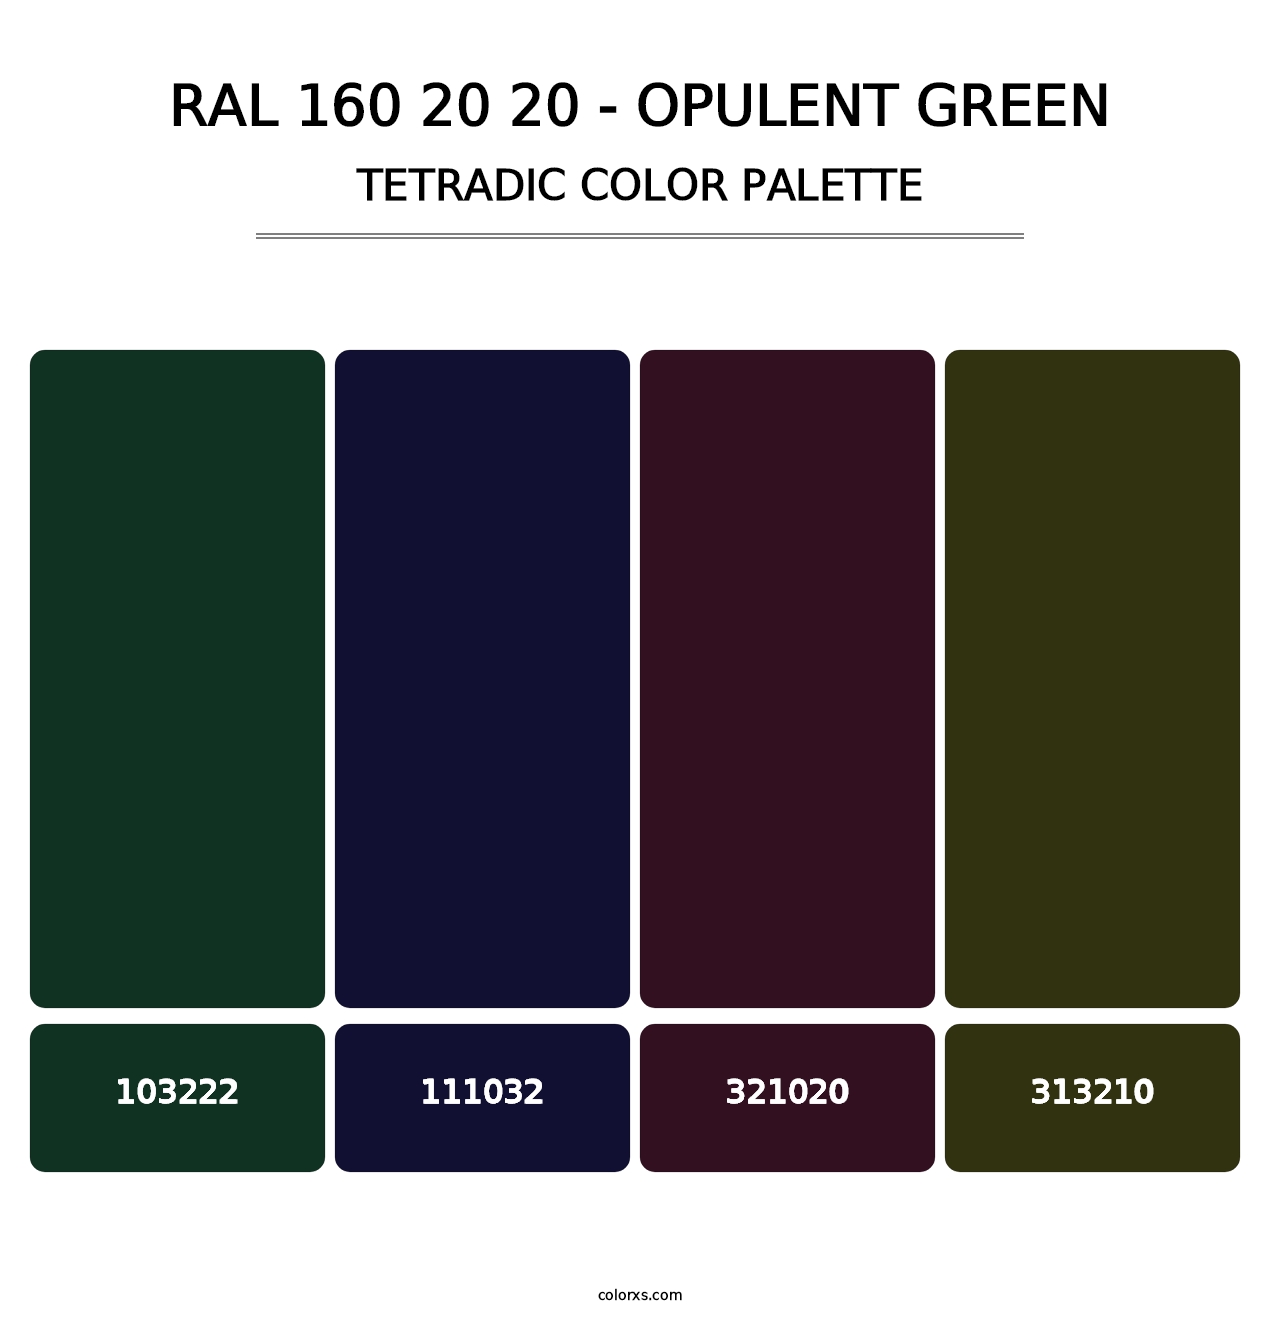 RAL 160 20 20 - Opulent Green - Tetradic Color Palette